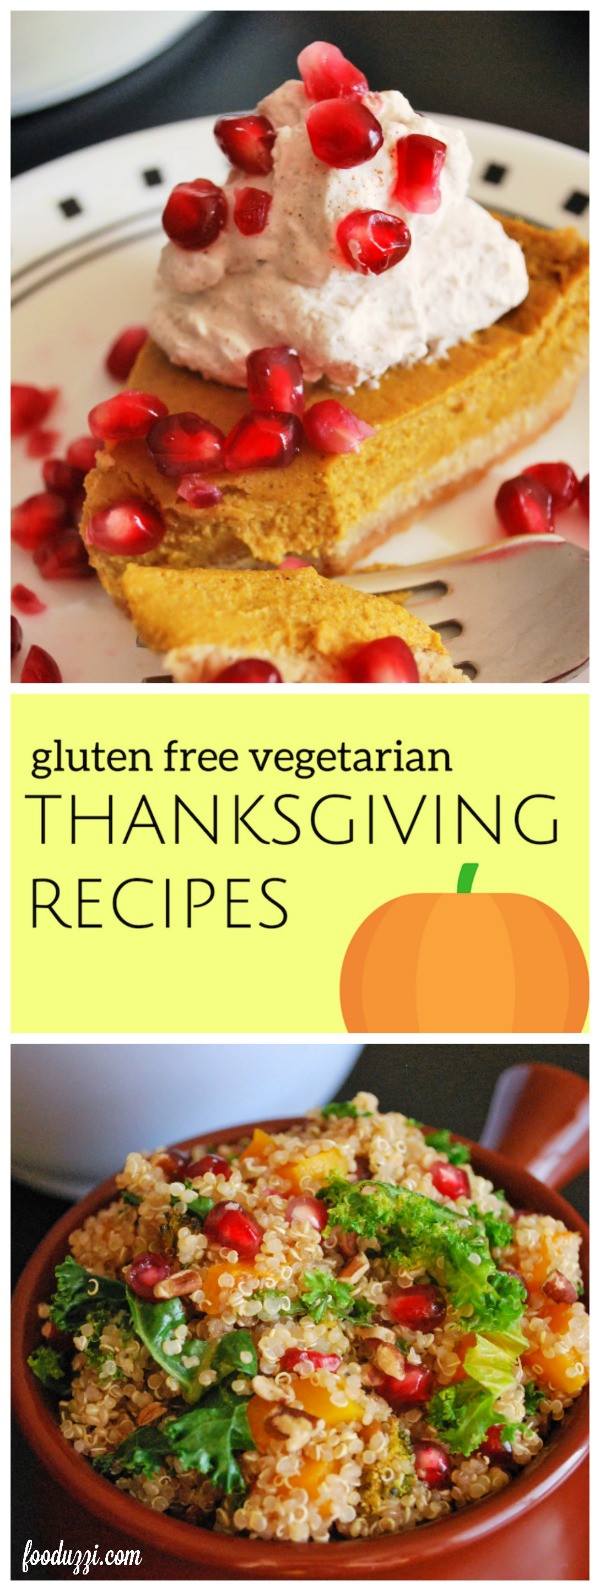 Top Vegetarian Thanksgiving Recipes
 Gluten Free Ve arian Thanksgiving Recipes Fooduzzi